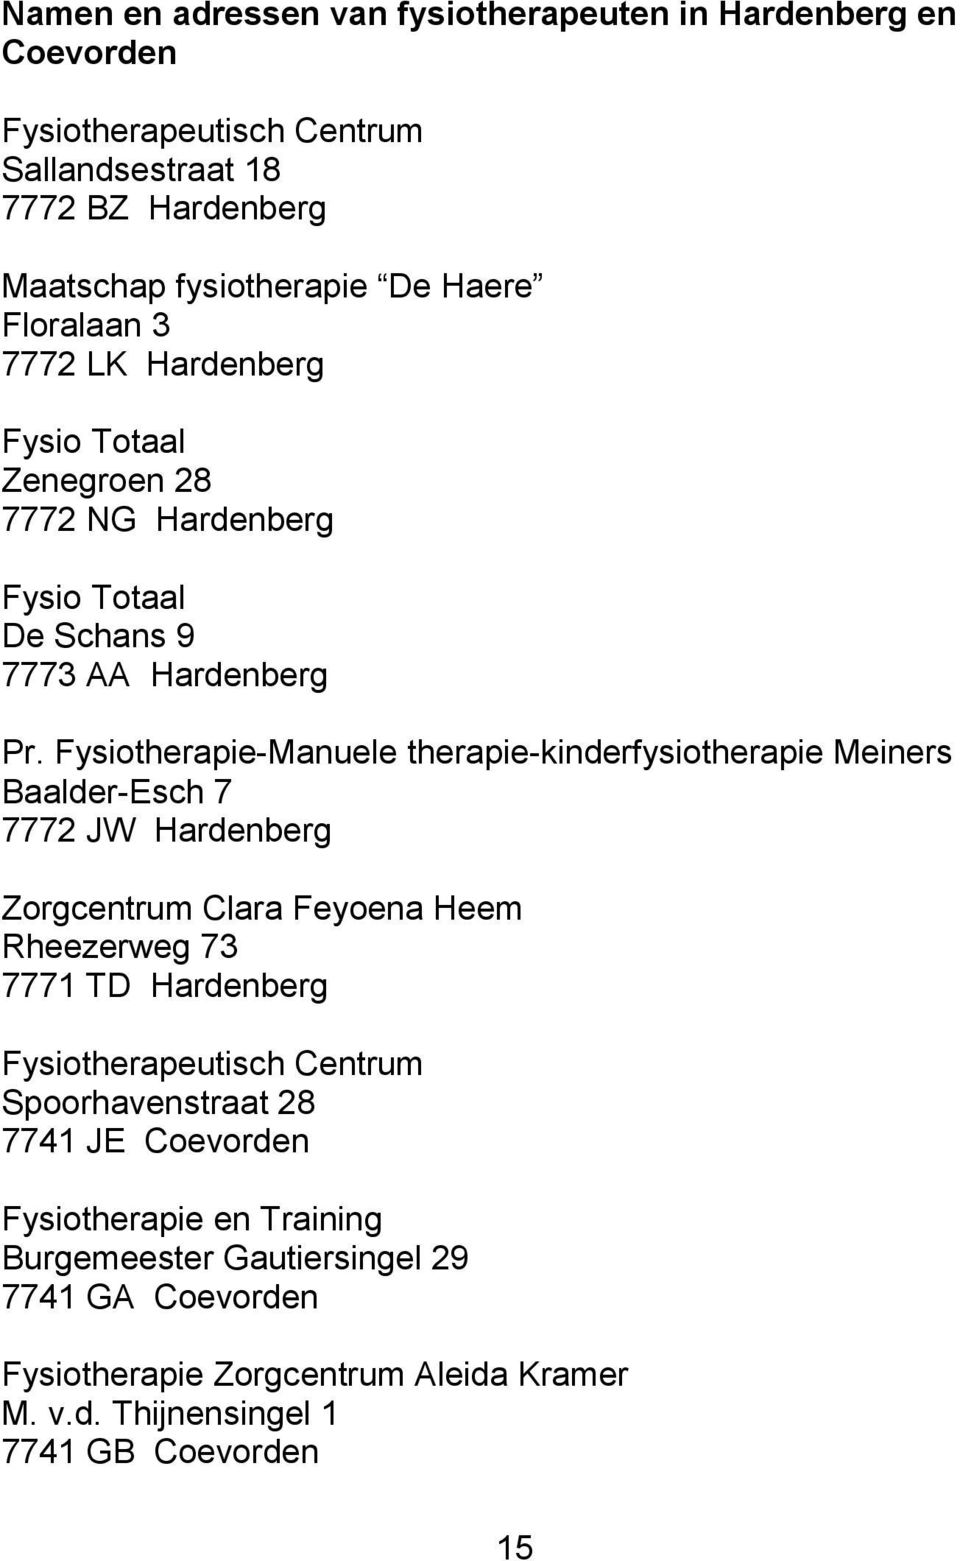 Fysiotherapie-Manuele therapie-kinderfysiotherapie Meiners Baalder-Esch 7 7772 JW Hardenberg Zorgcentrum Clara Feyoena Heem Rheezerweg 73 7771 TD Hardenberg